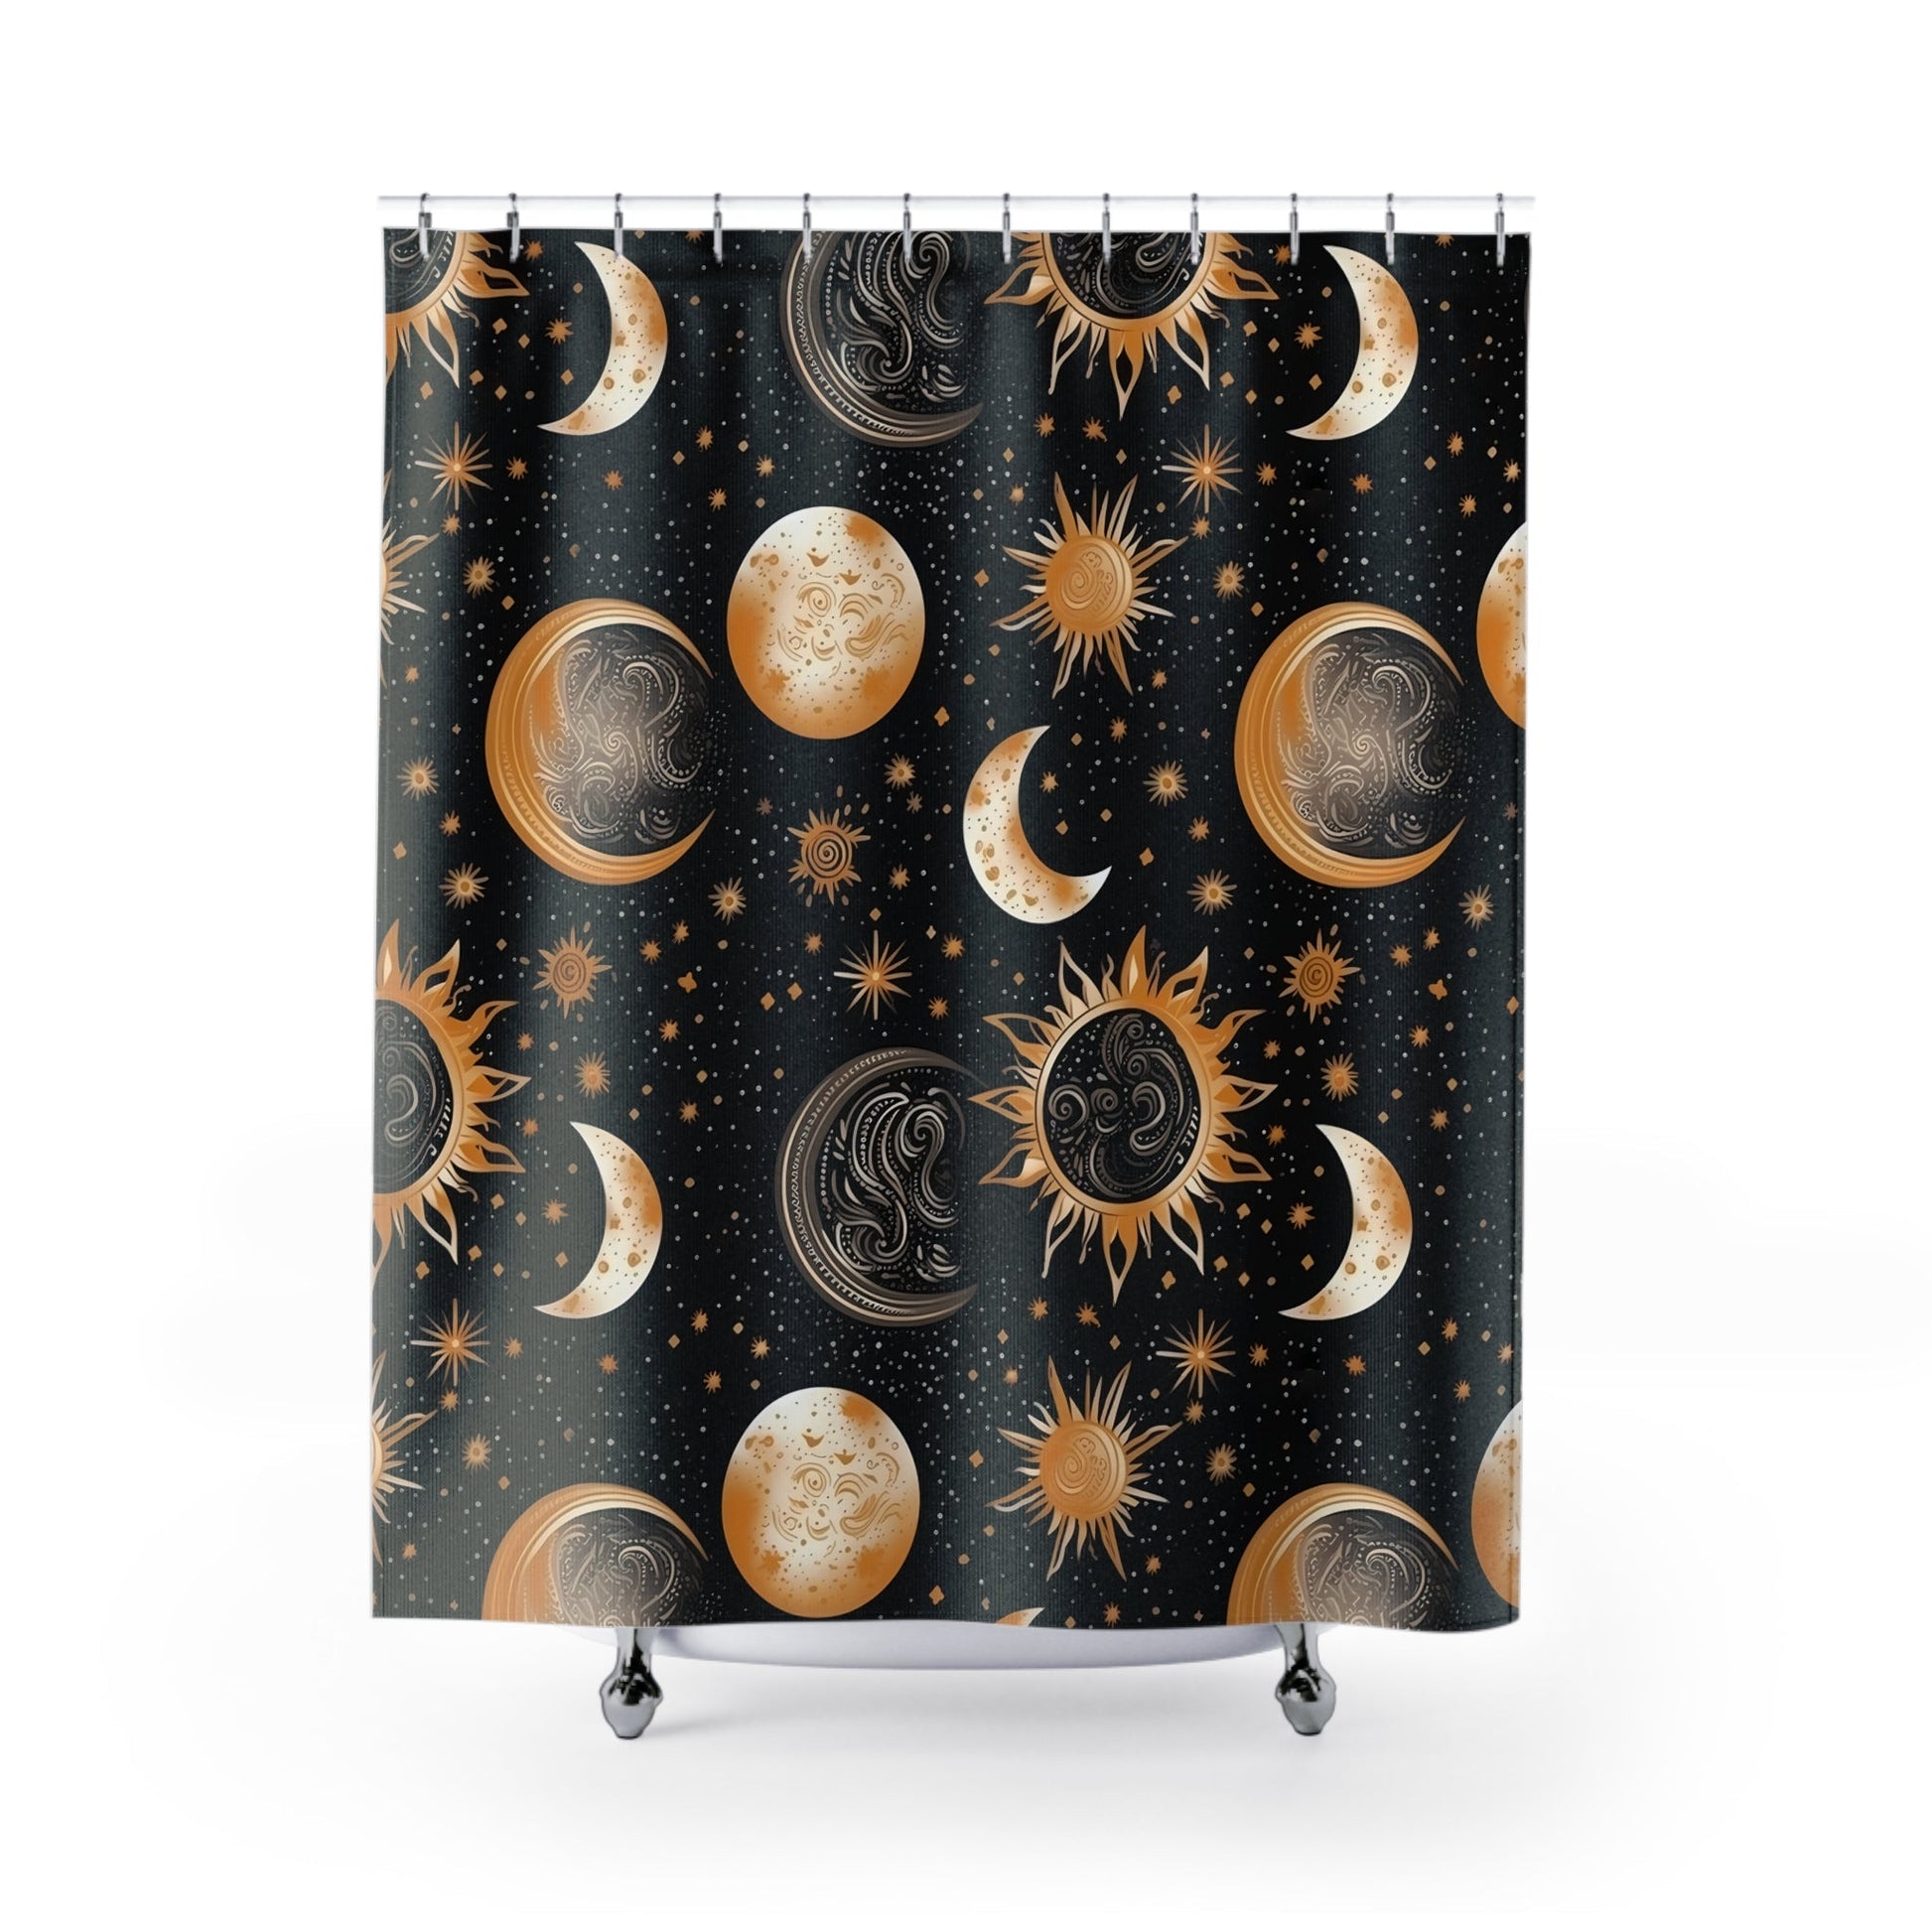 Mystical Celestial Print Shower CurtainHome DecorVTZdesigns71" × 74"BathBathroomhalloween